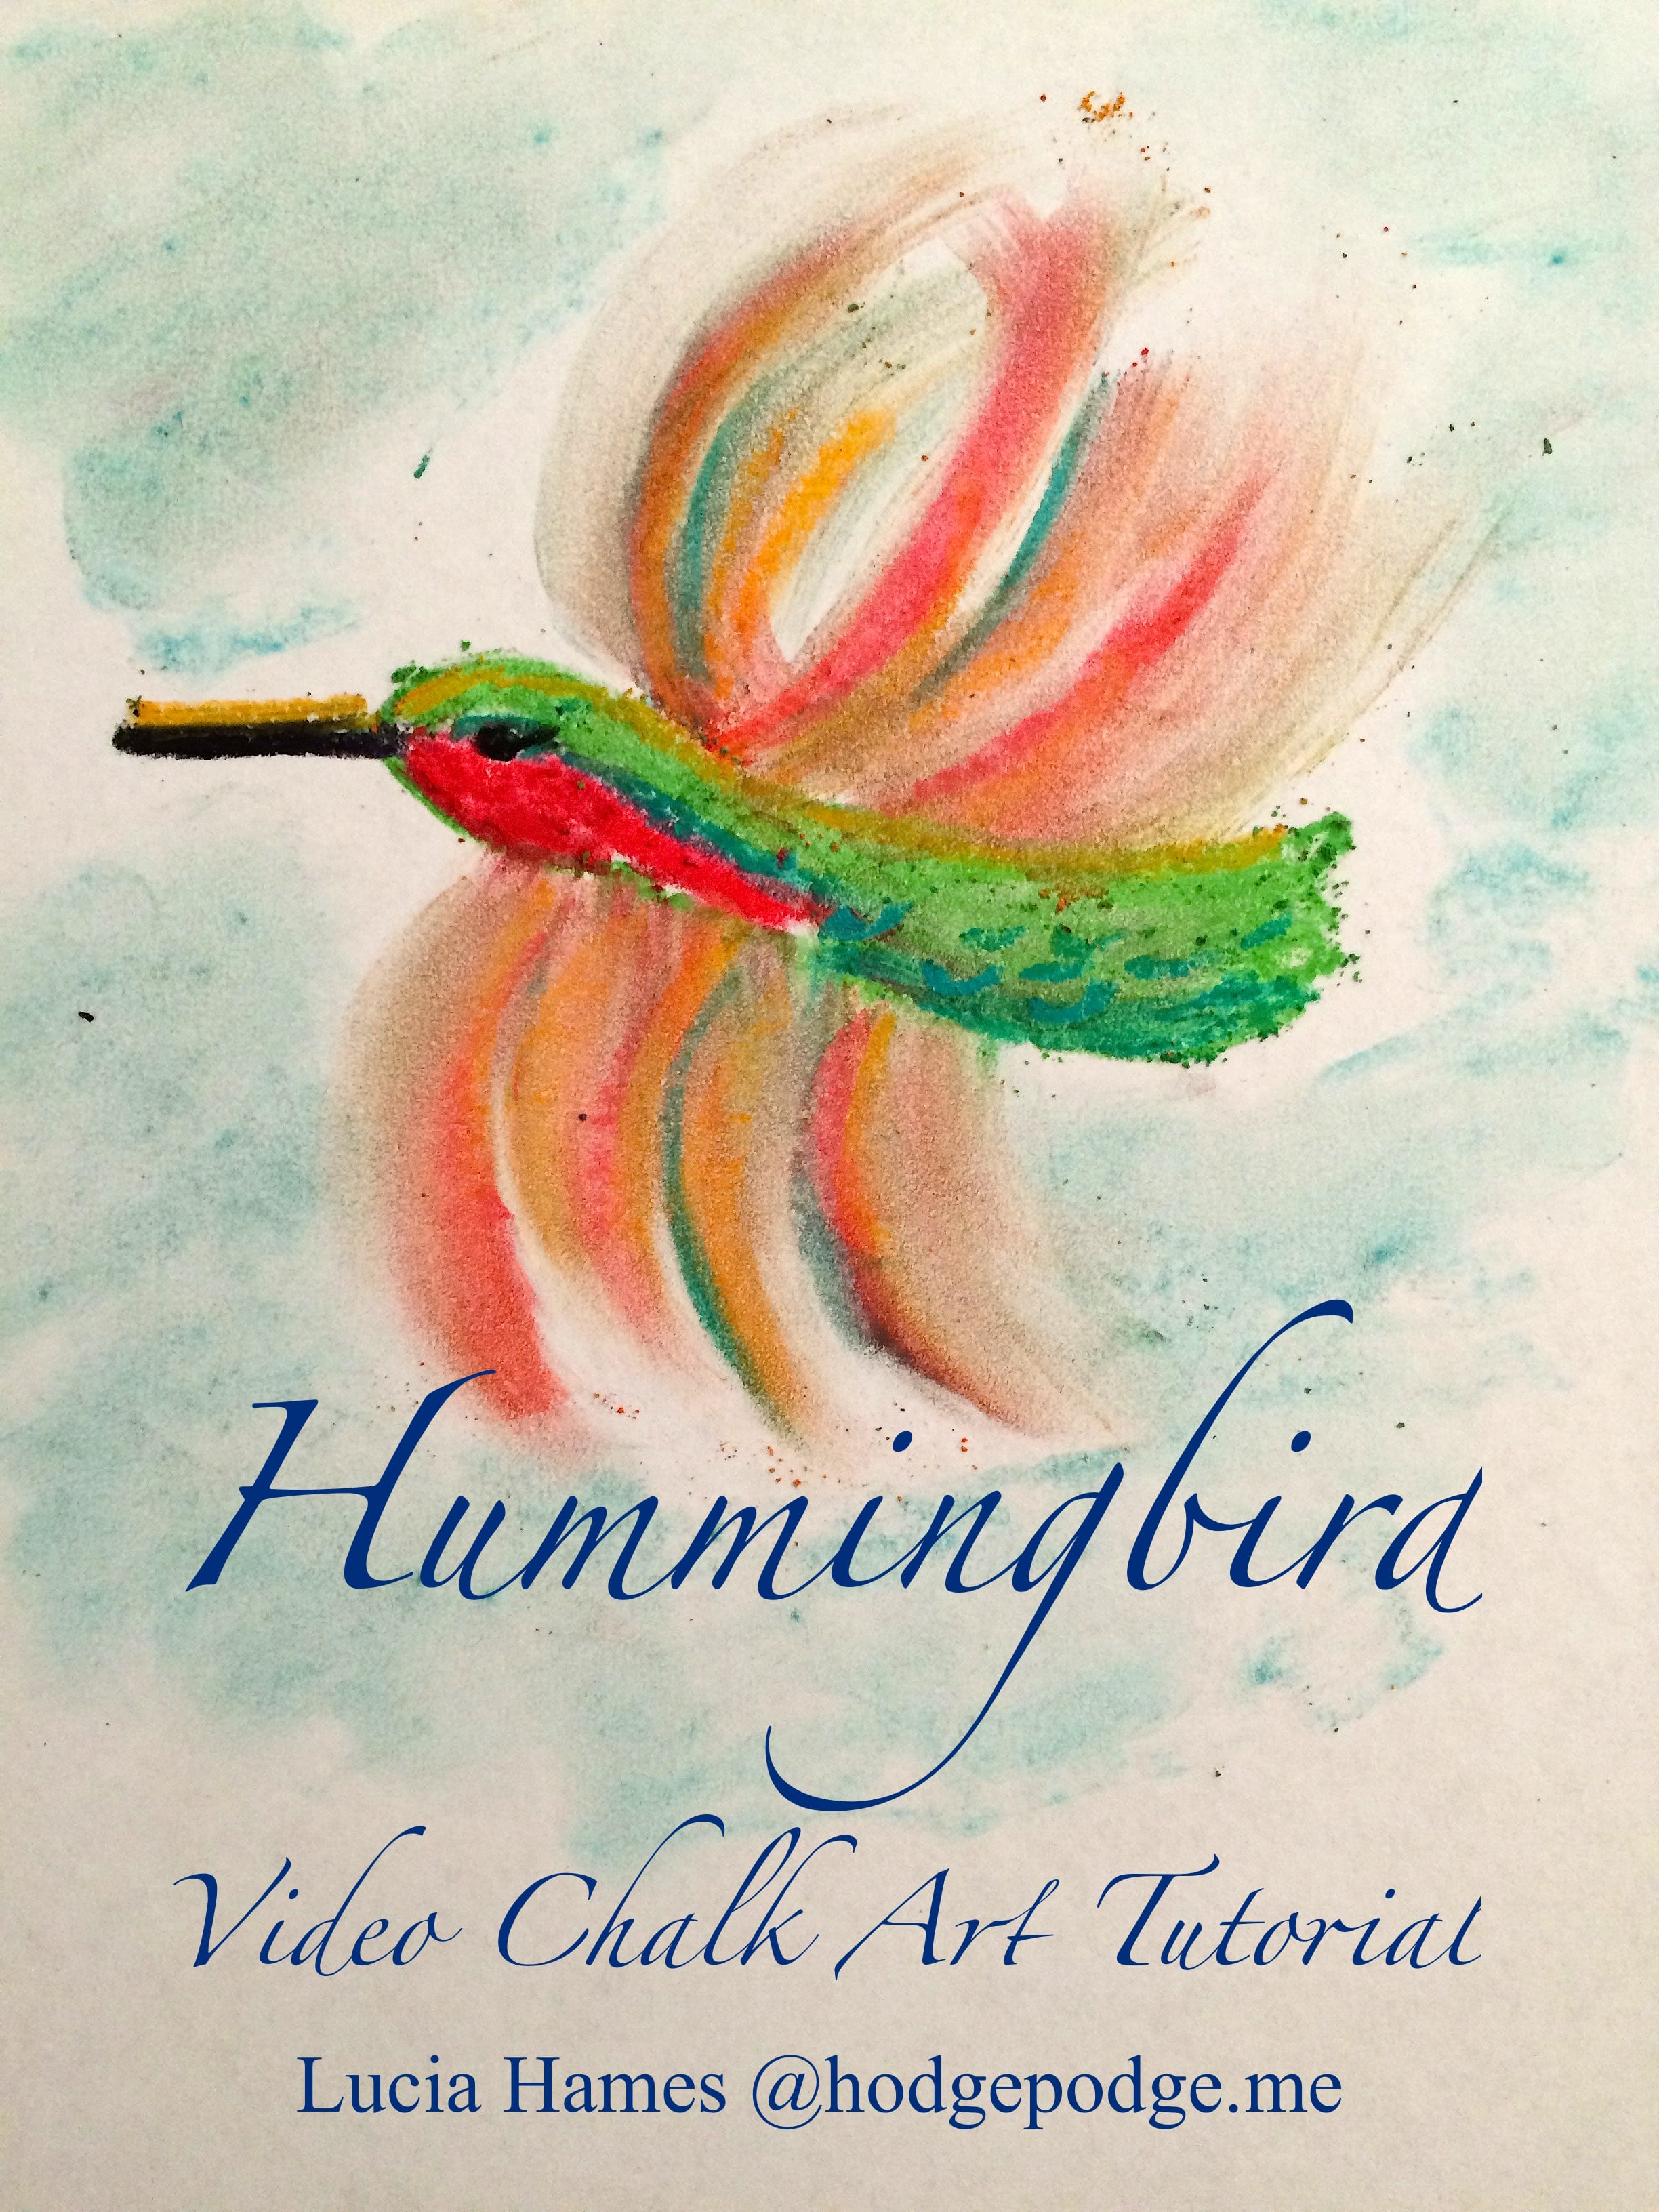 Hummingbird Video Chalk Art Tutorial